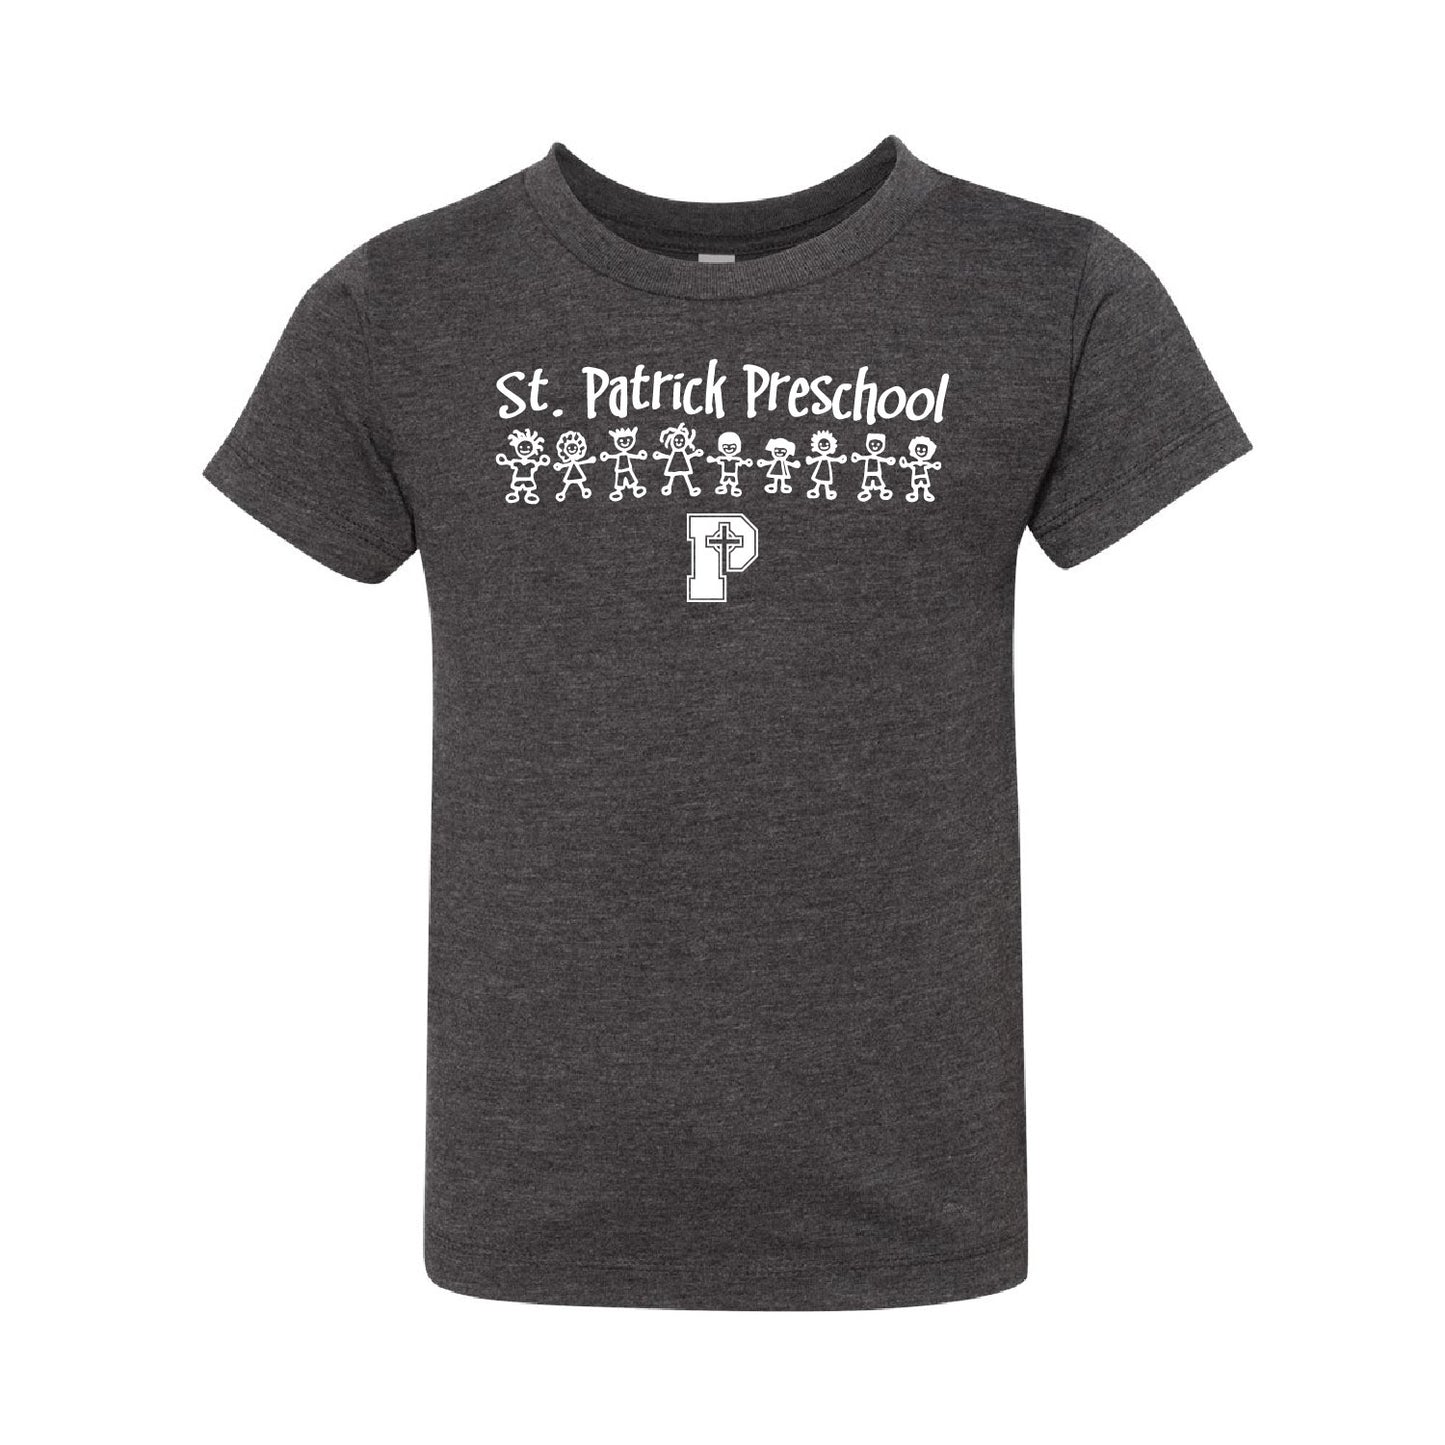 Preschool Premium Cotton T-Shirt